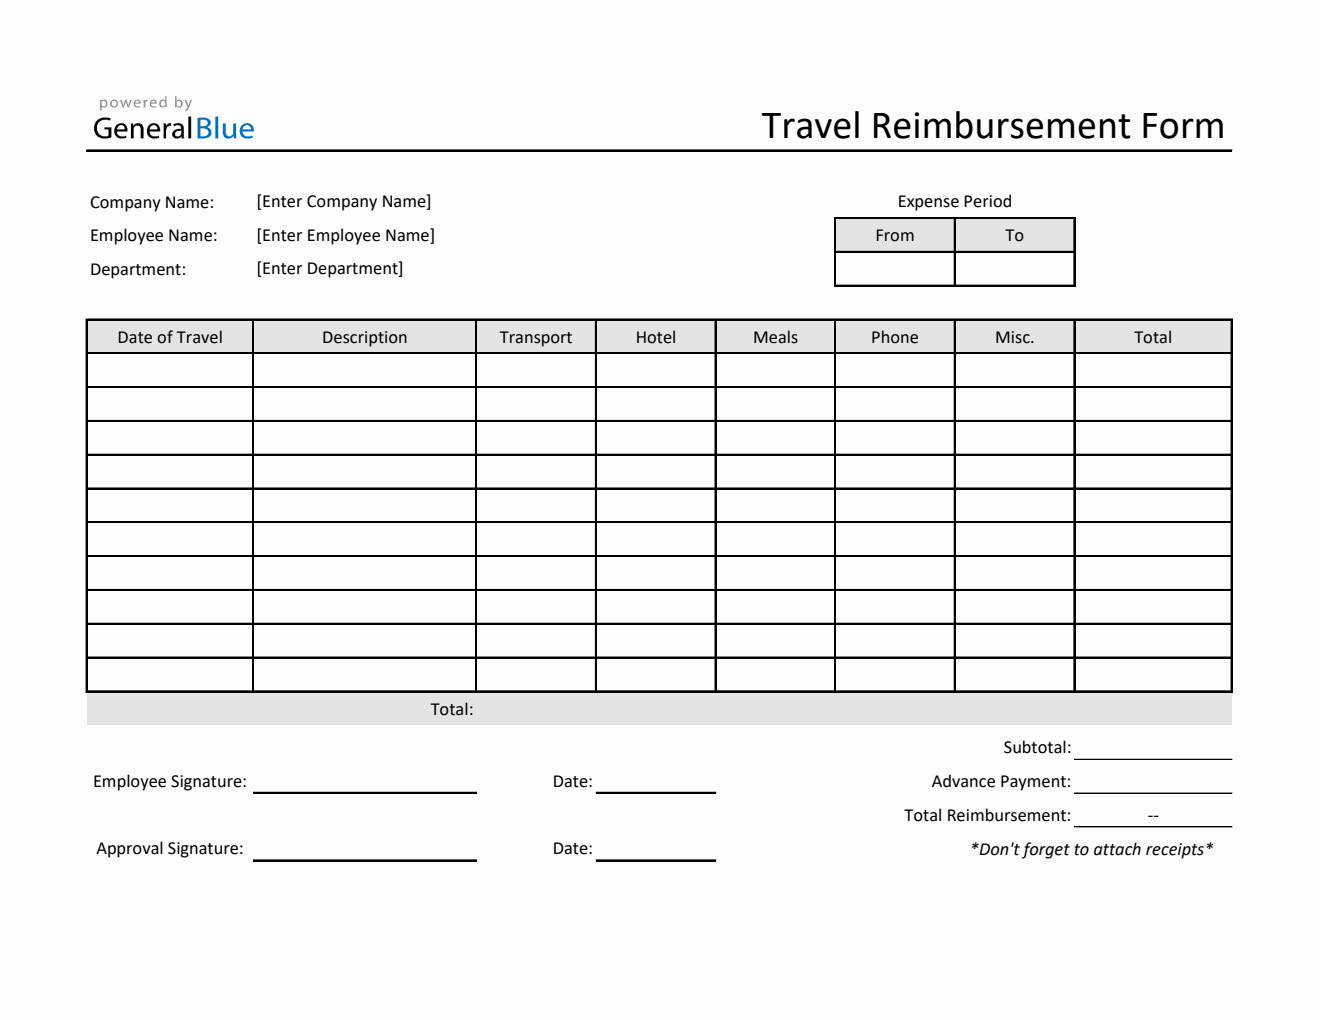 Travel Reimbursement Form in Excel (Simple)